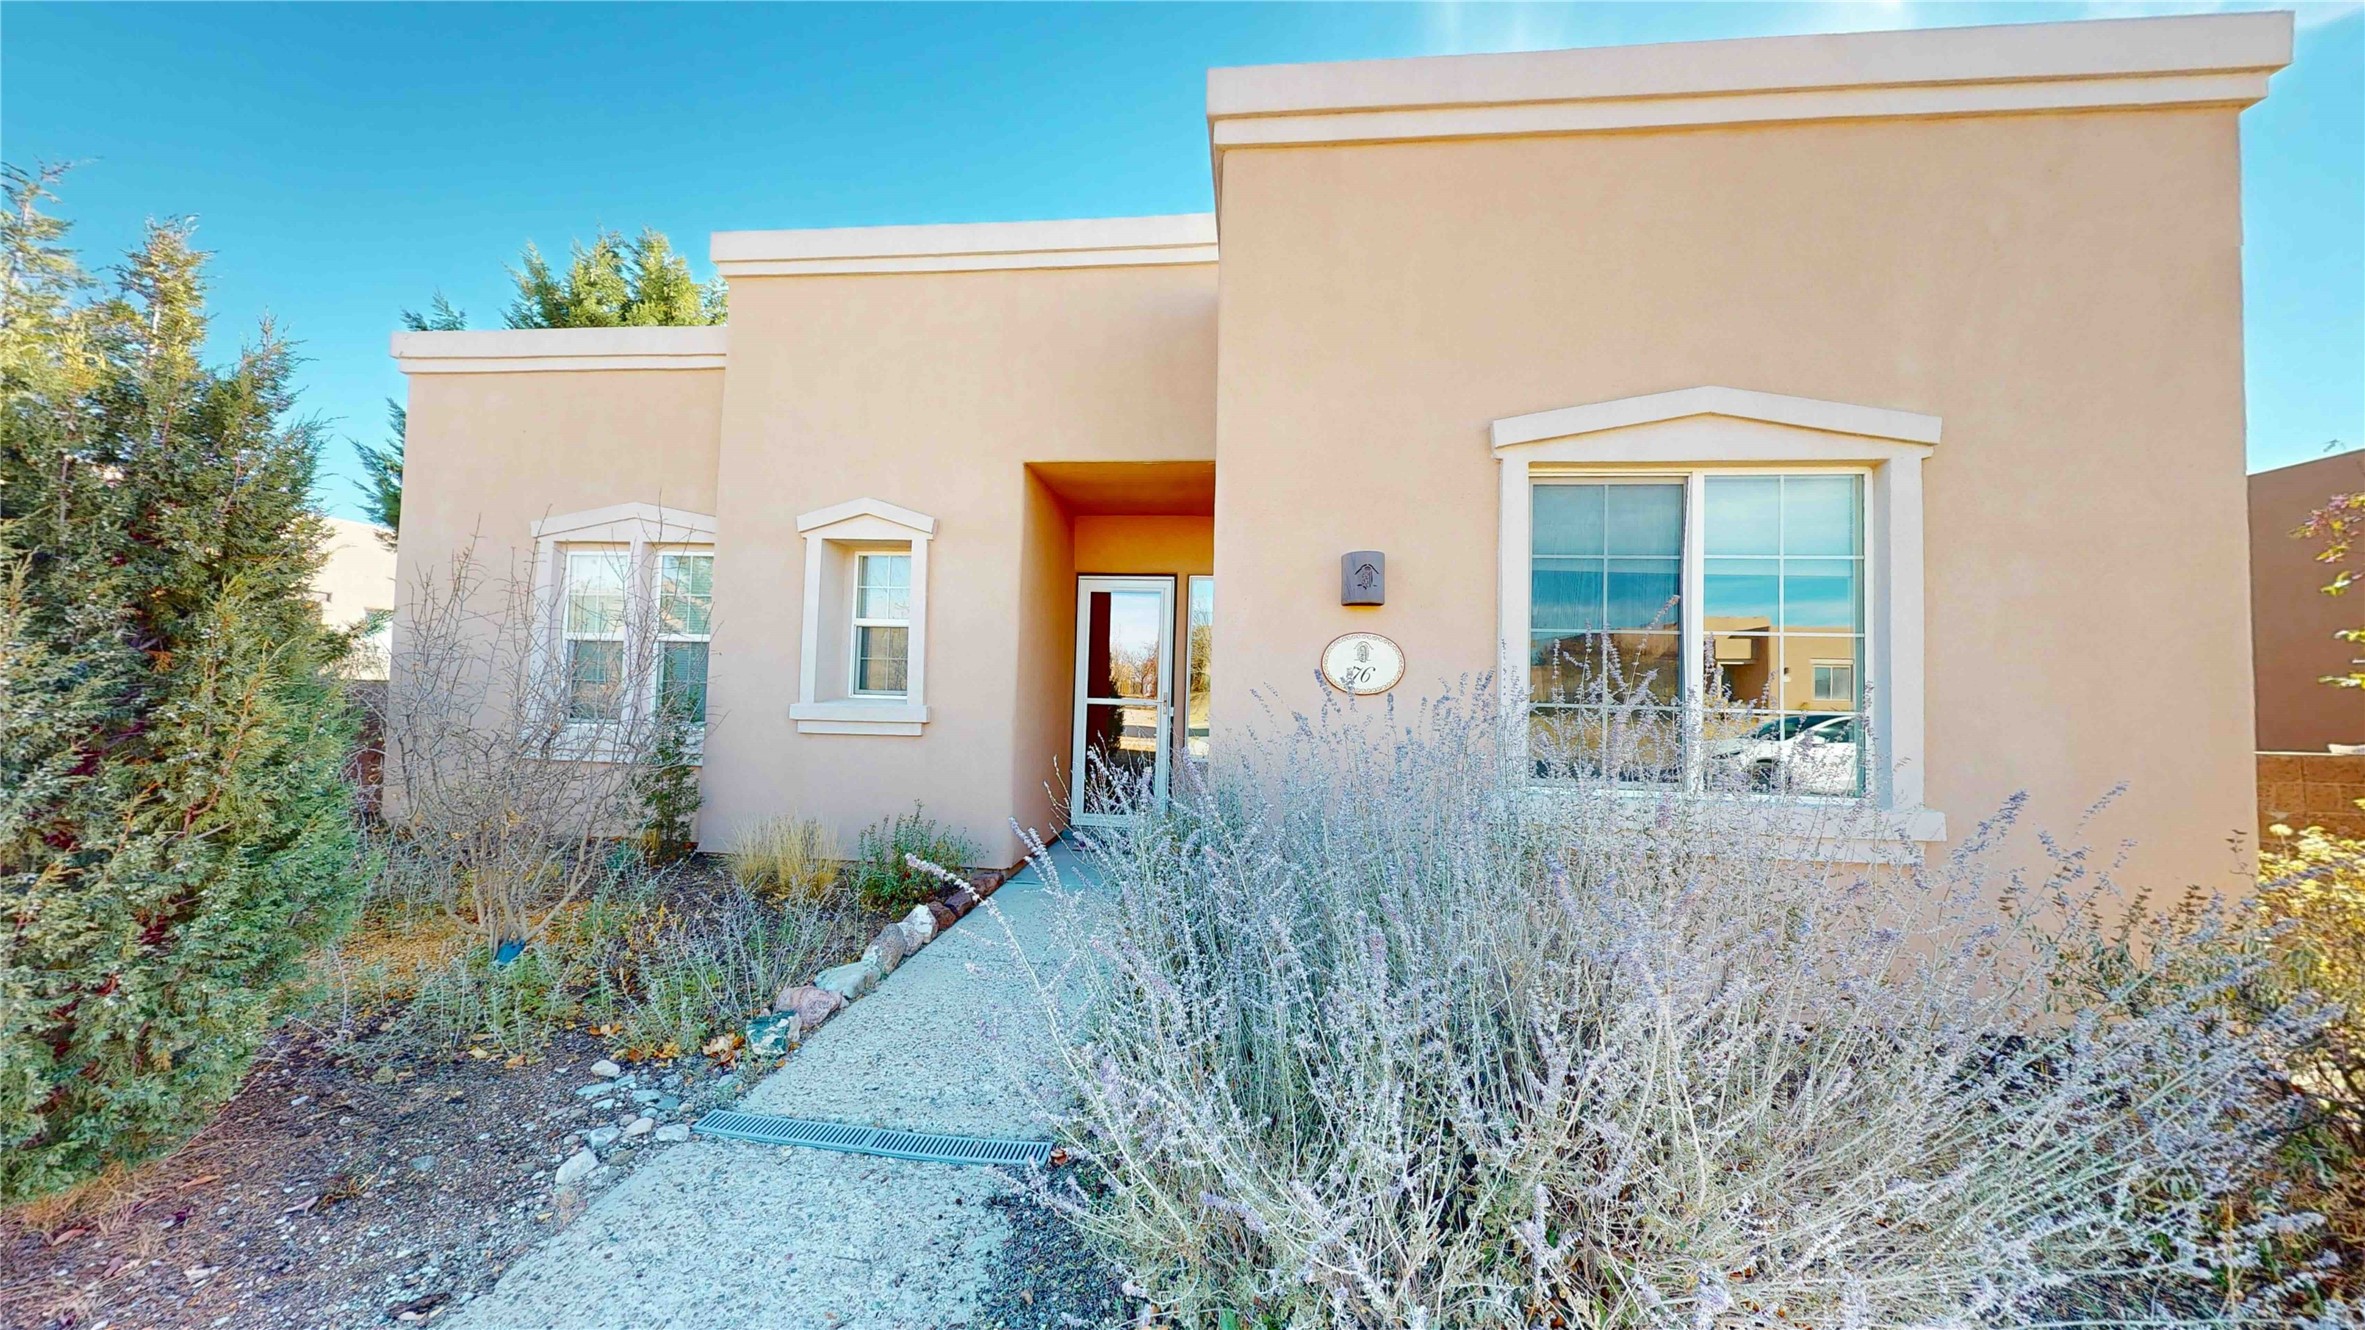 76 Johnson Mesa, Santa Fe, New Mexico 87508, 2 Bedrooms Bedrooms, ,2 BathroomsBathrooms,Residential,For Sale,76 Johnson Mesa,202341716